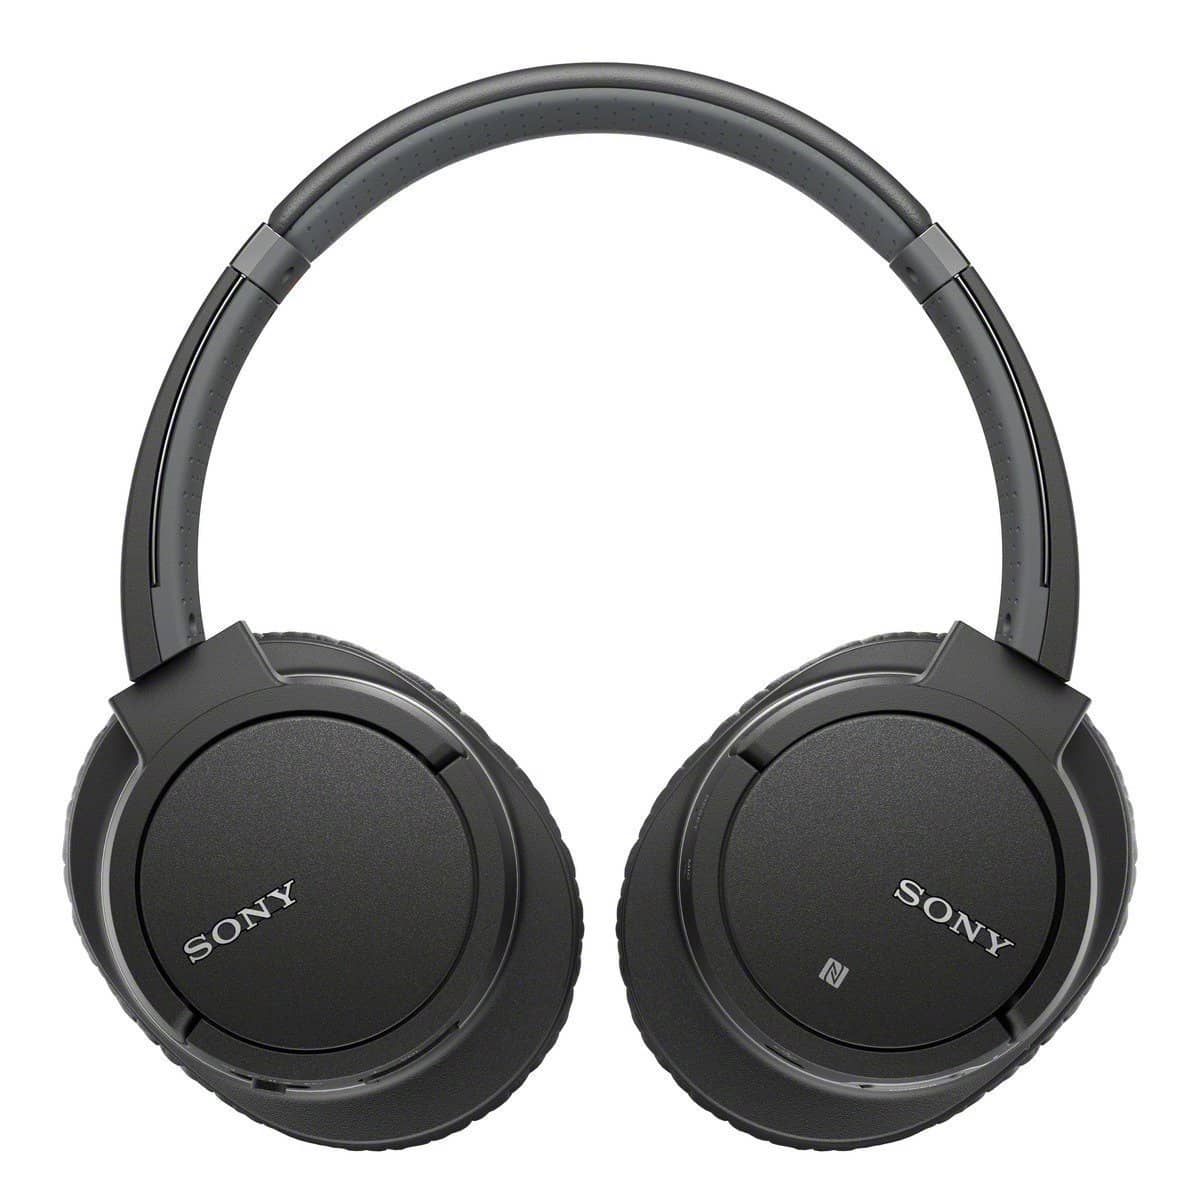 Sony MDRZX770BT Bluetooth Stereo Headset - Black